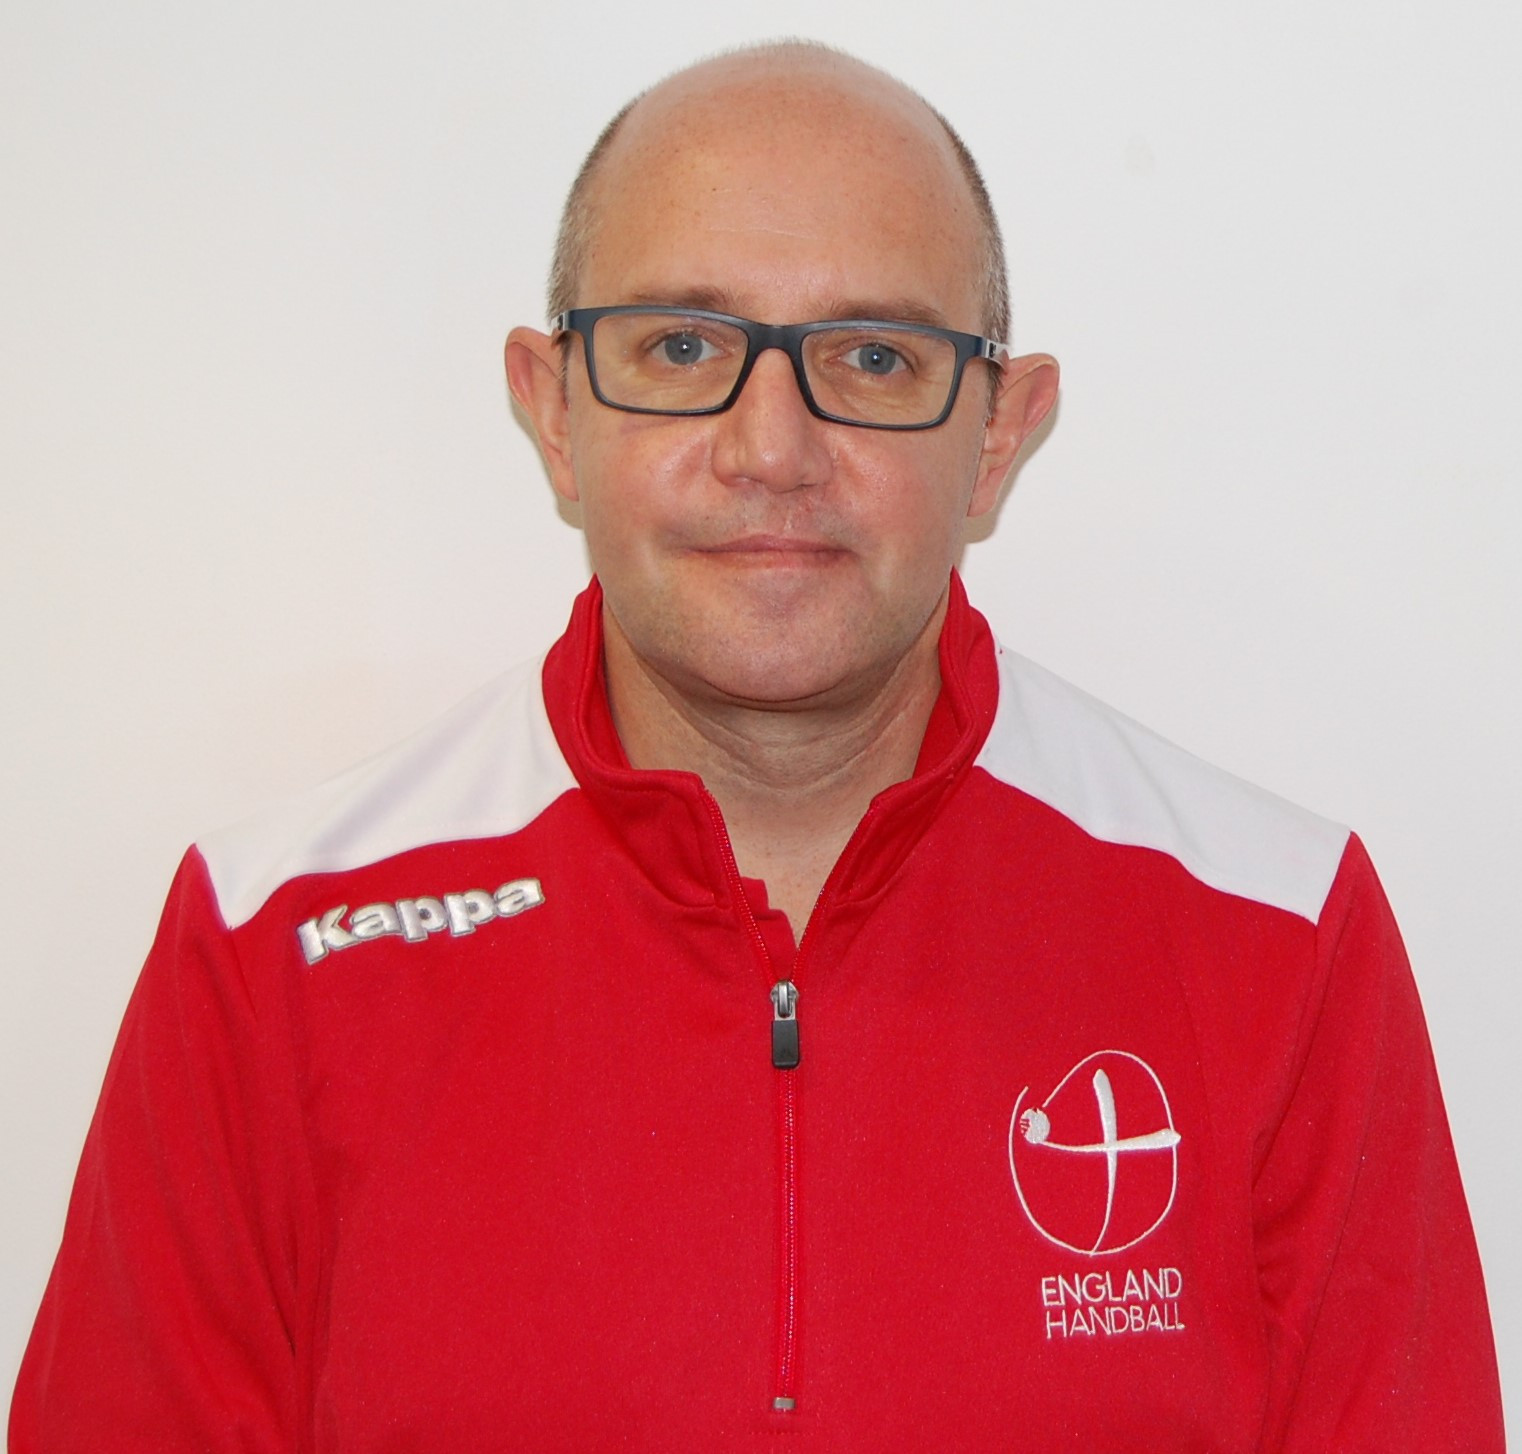 The chief executive of England Handball, David Meli, has announced he is to step down ©England Handball